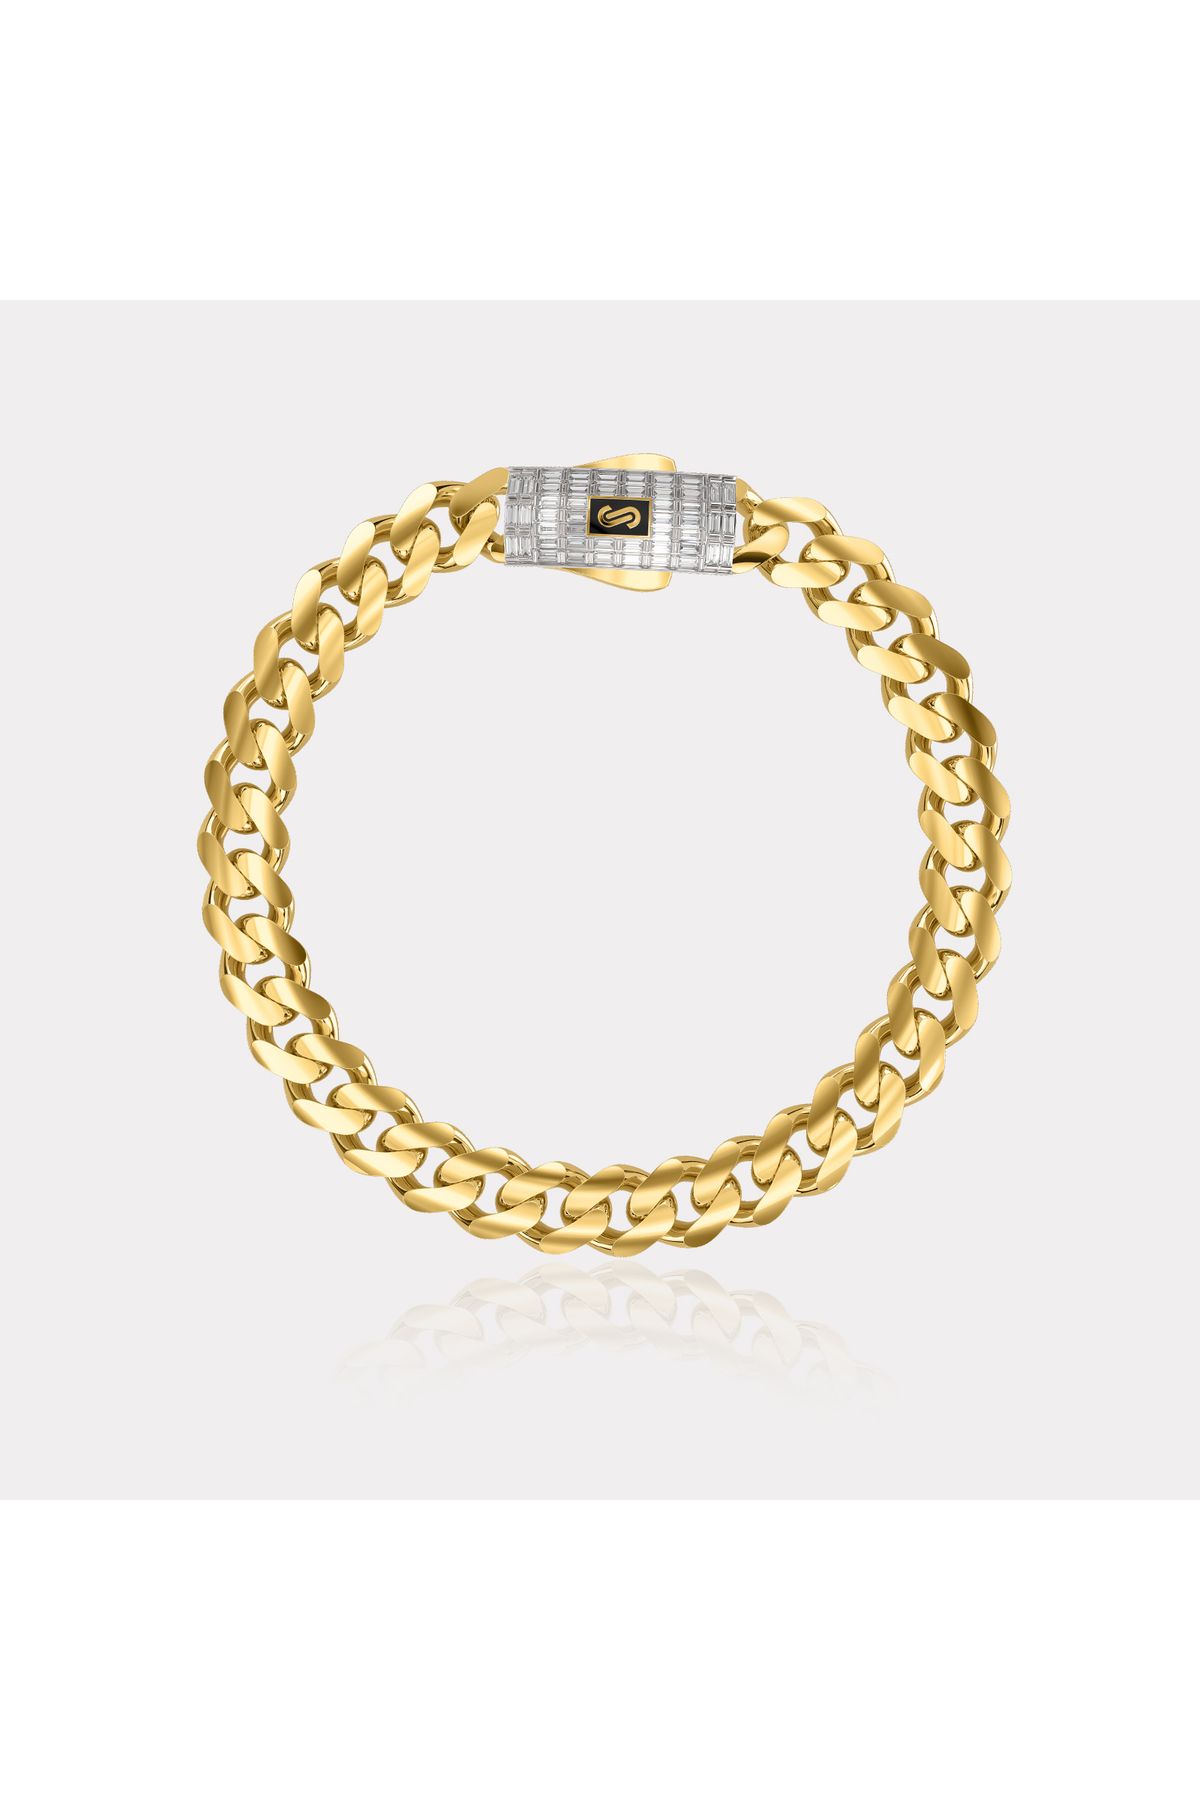 Atasay Monaco Chain Sarı Altın Bileklik Baget Kilit - 11.50 mm